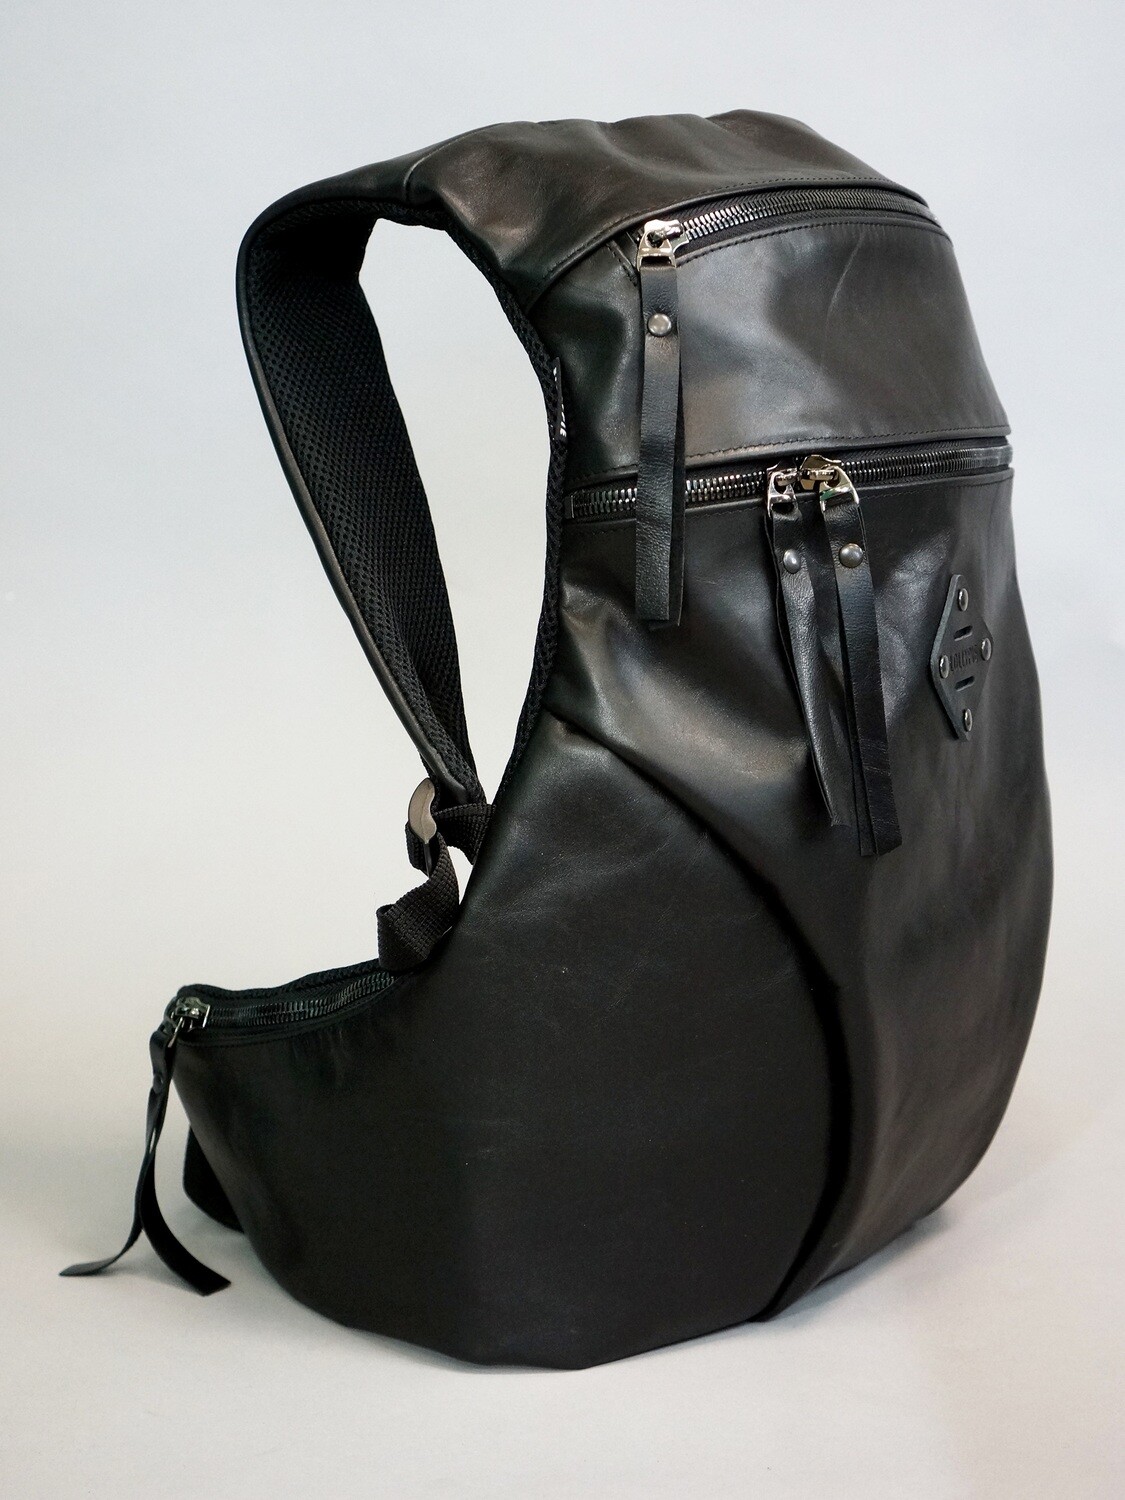 Anatomical Black Genuine Leather Backpack